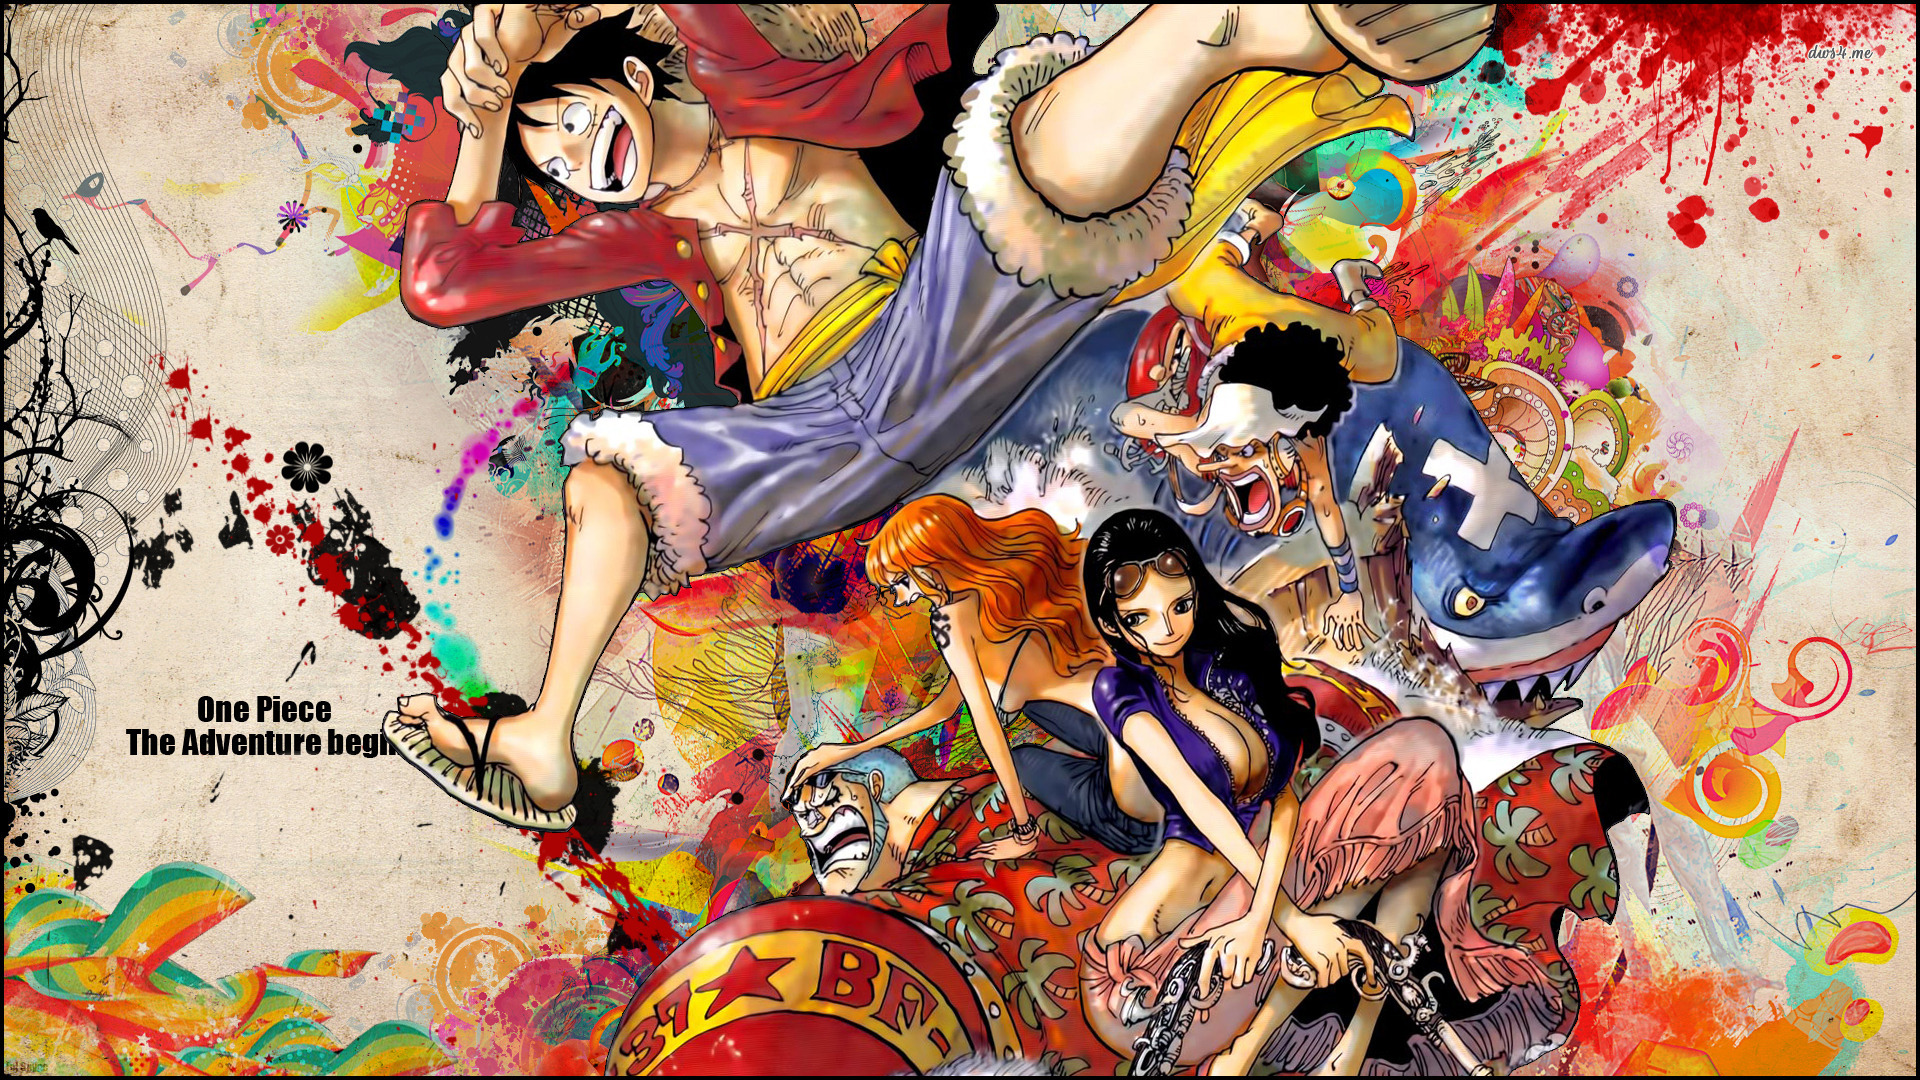 One Piece Wallpaper Widescreen wallpapers55com   Best Wallpapers 1920x1080